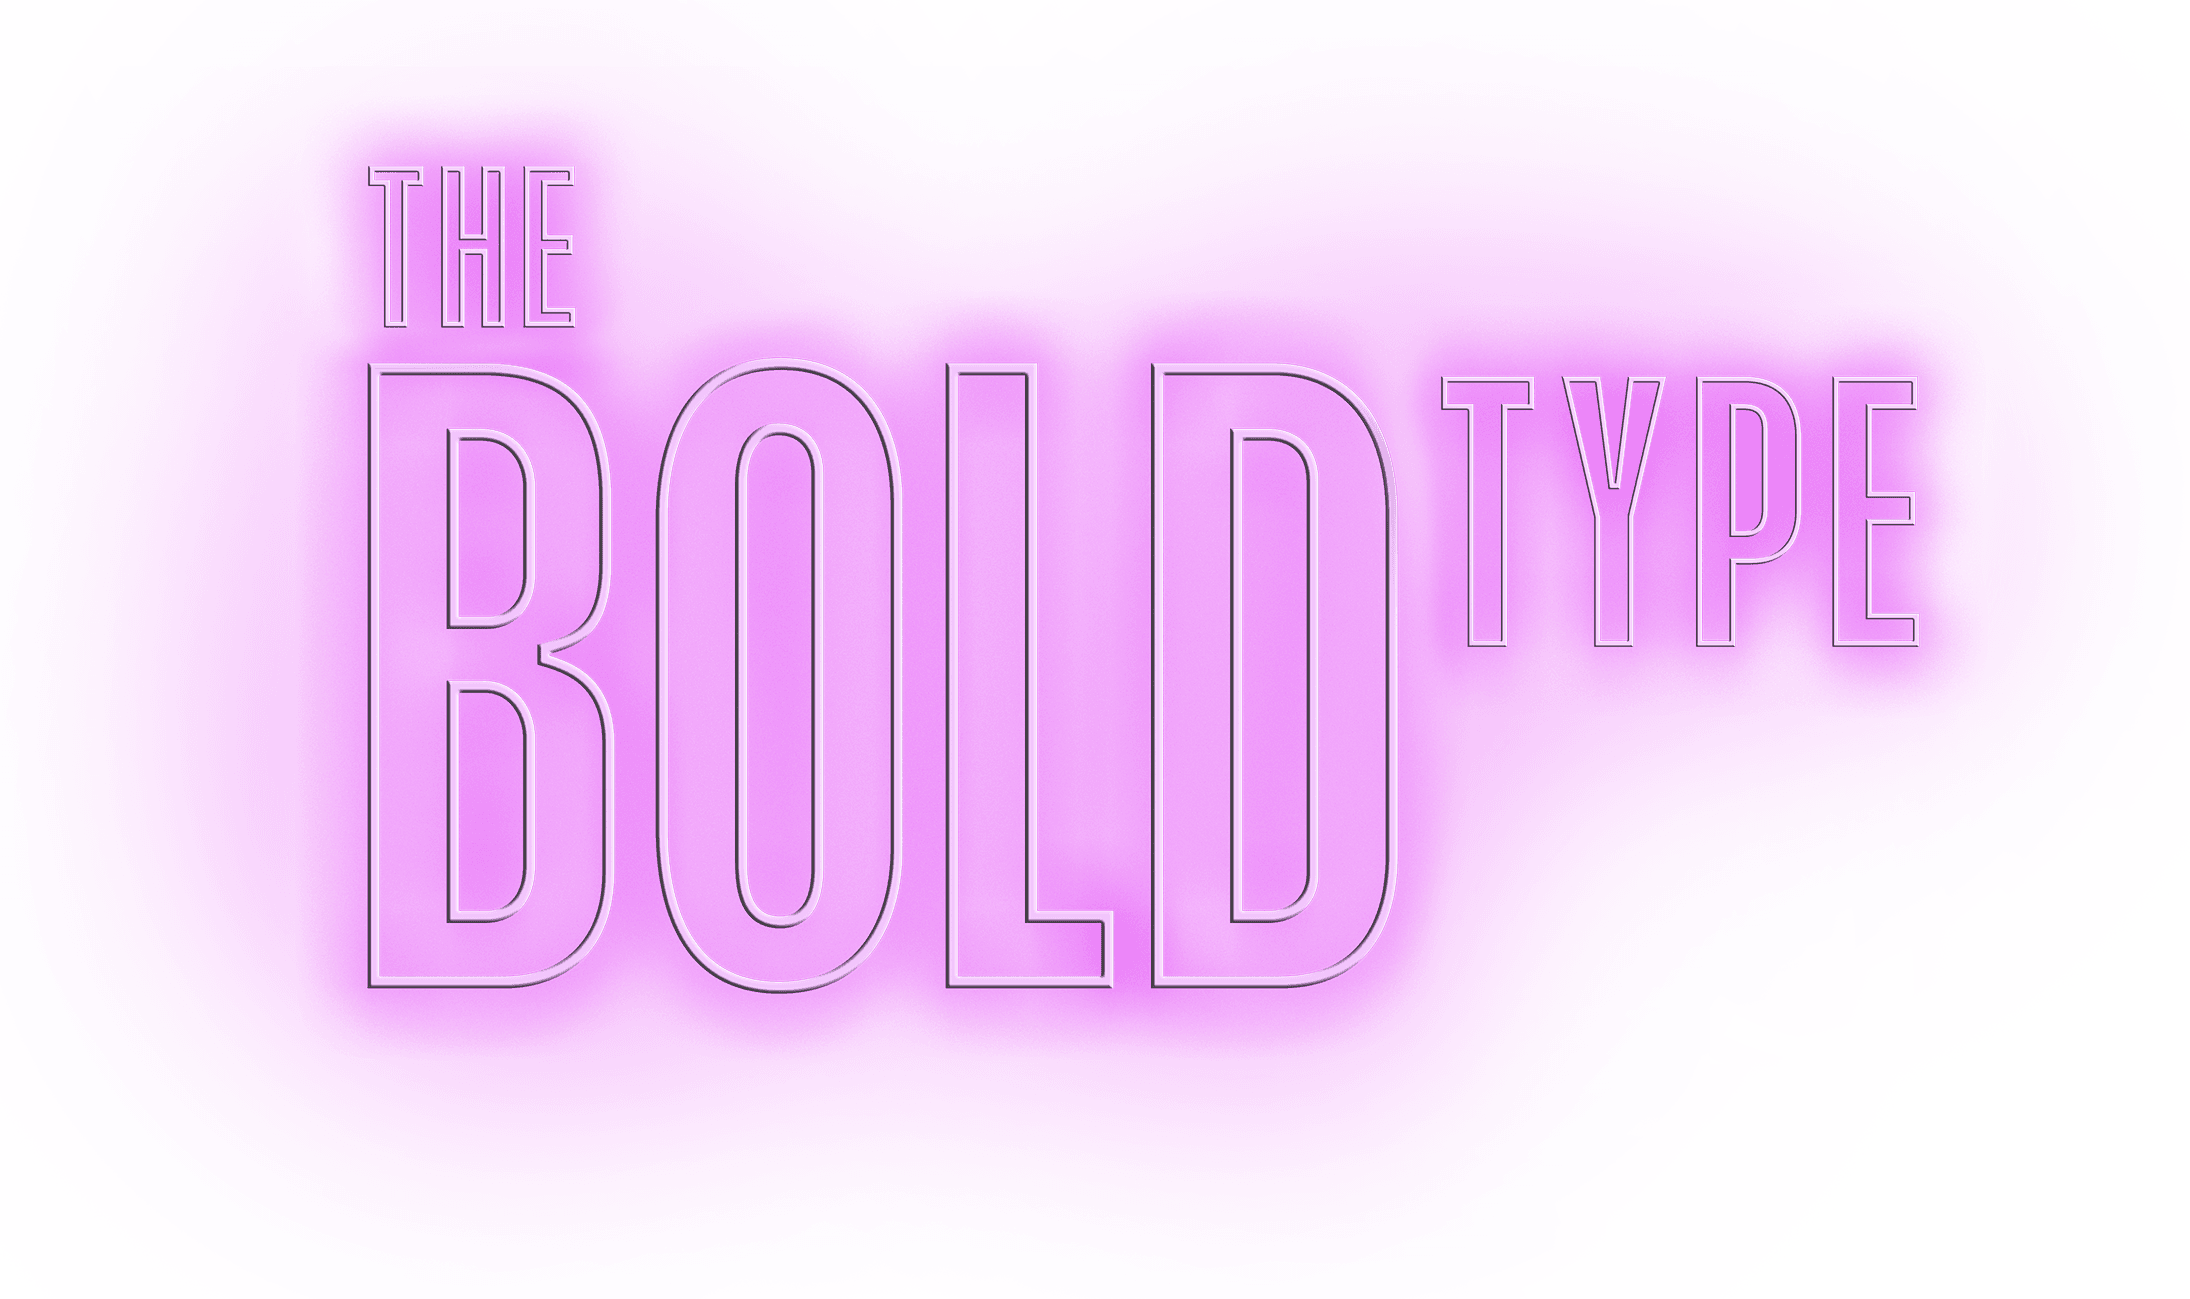 The Bold Type logo